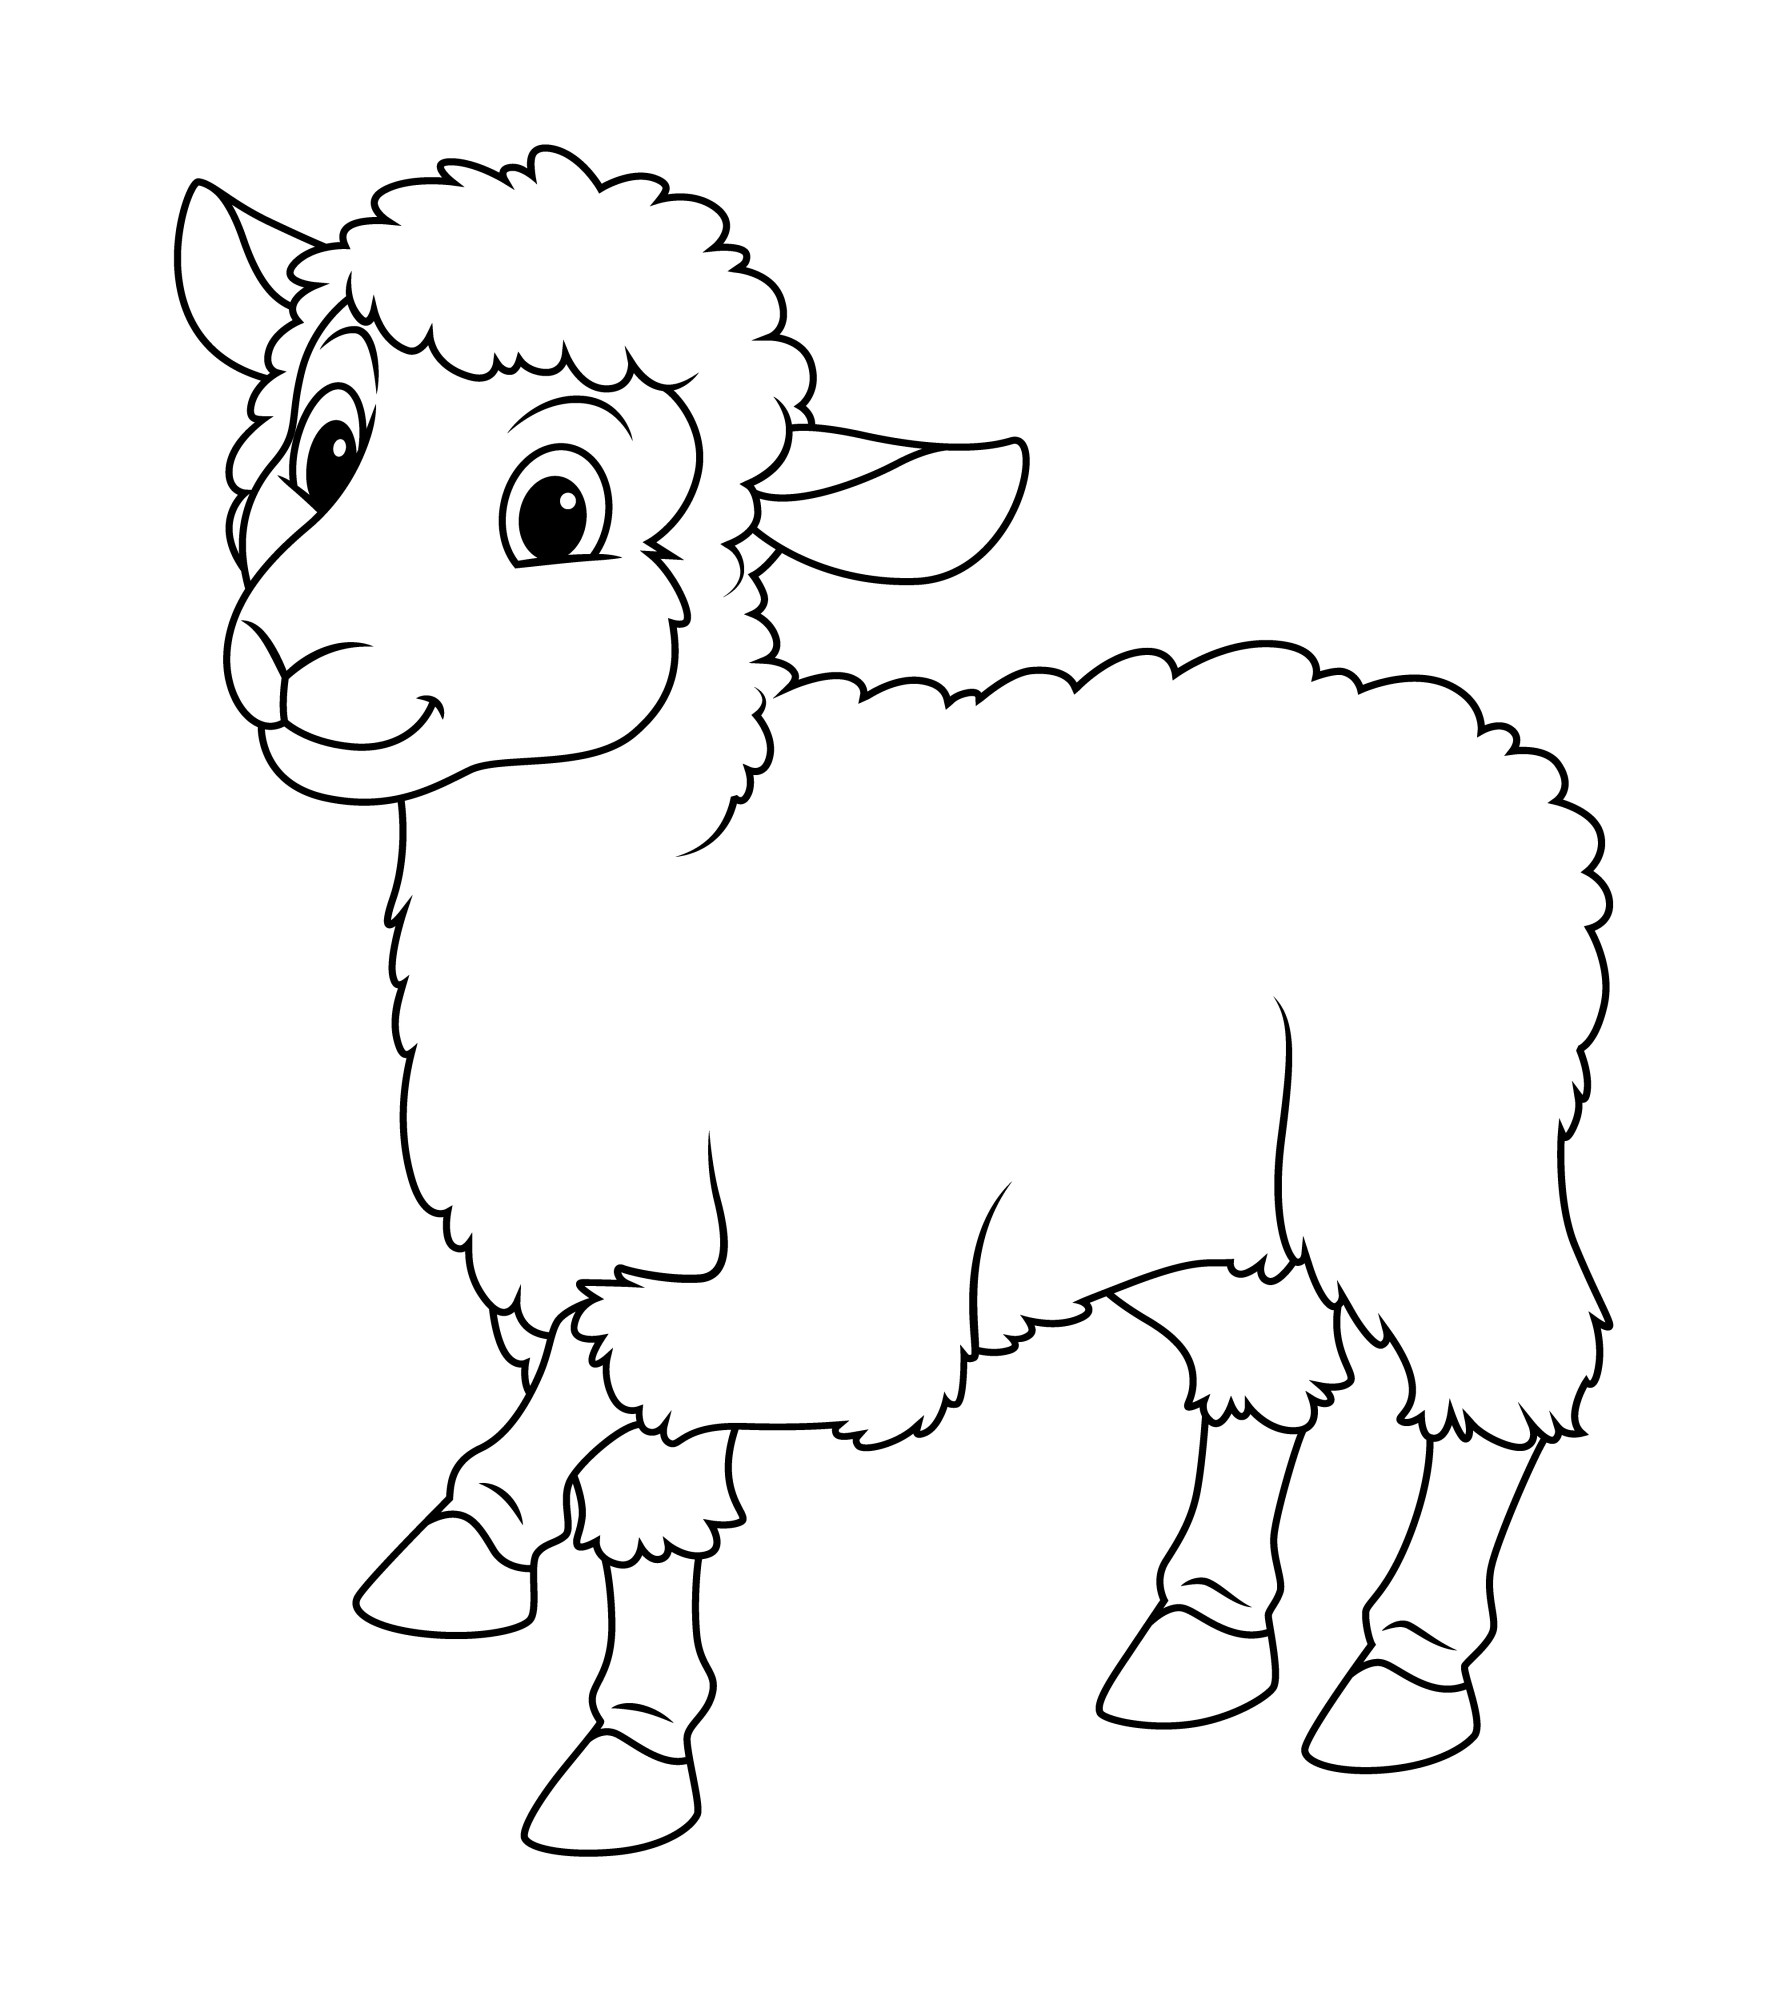 Раскраска для детей: милая овца с поднятым копытцем